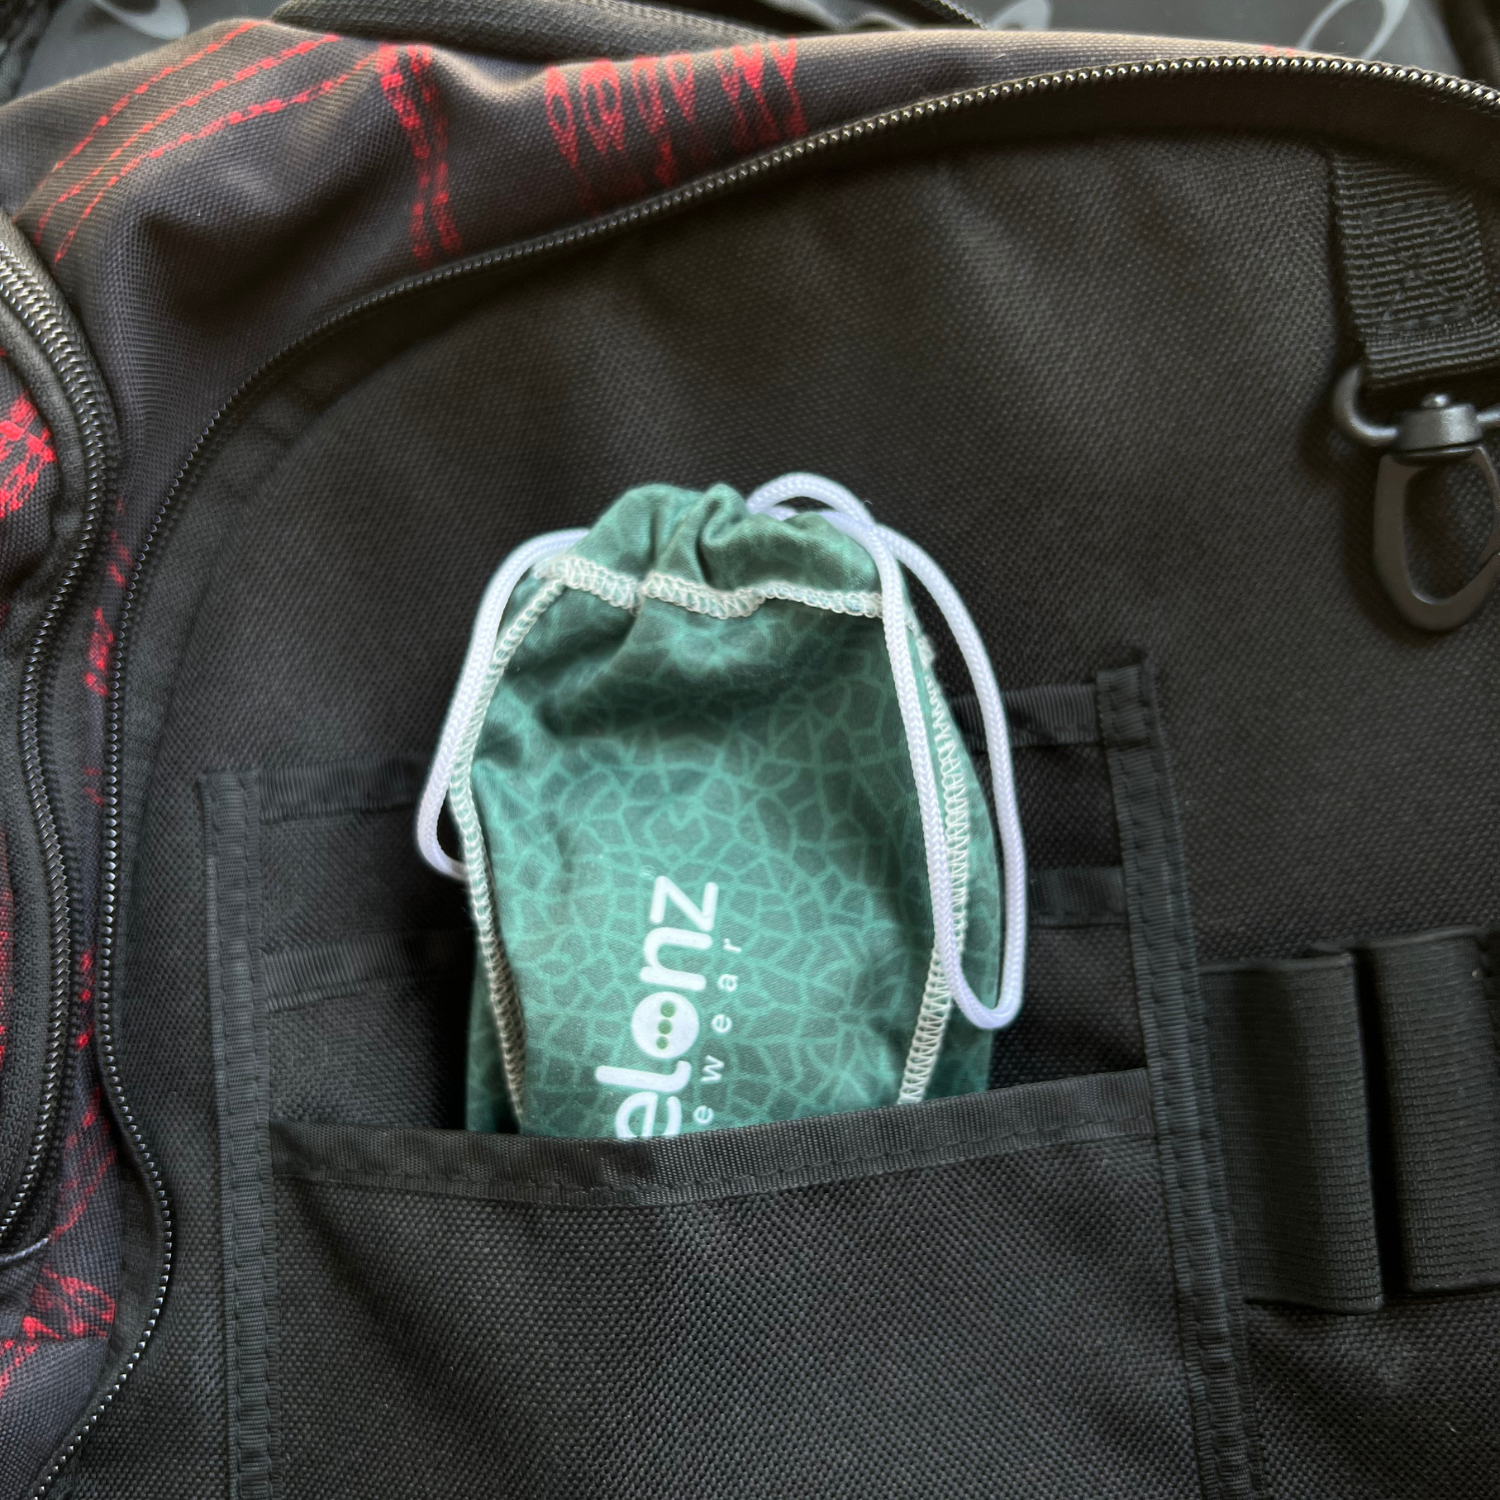 Melonz Microfiber Soft Case - Drawstring Travel Bag